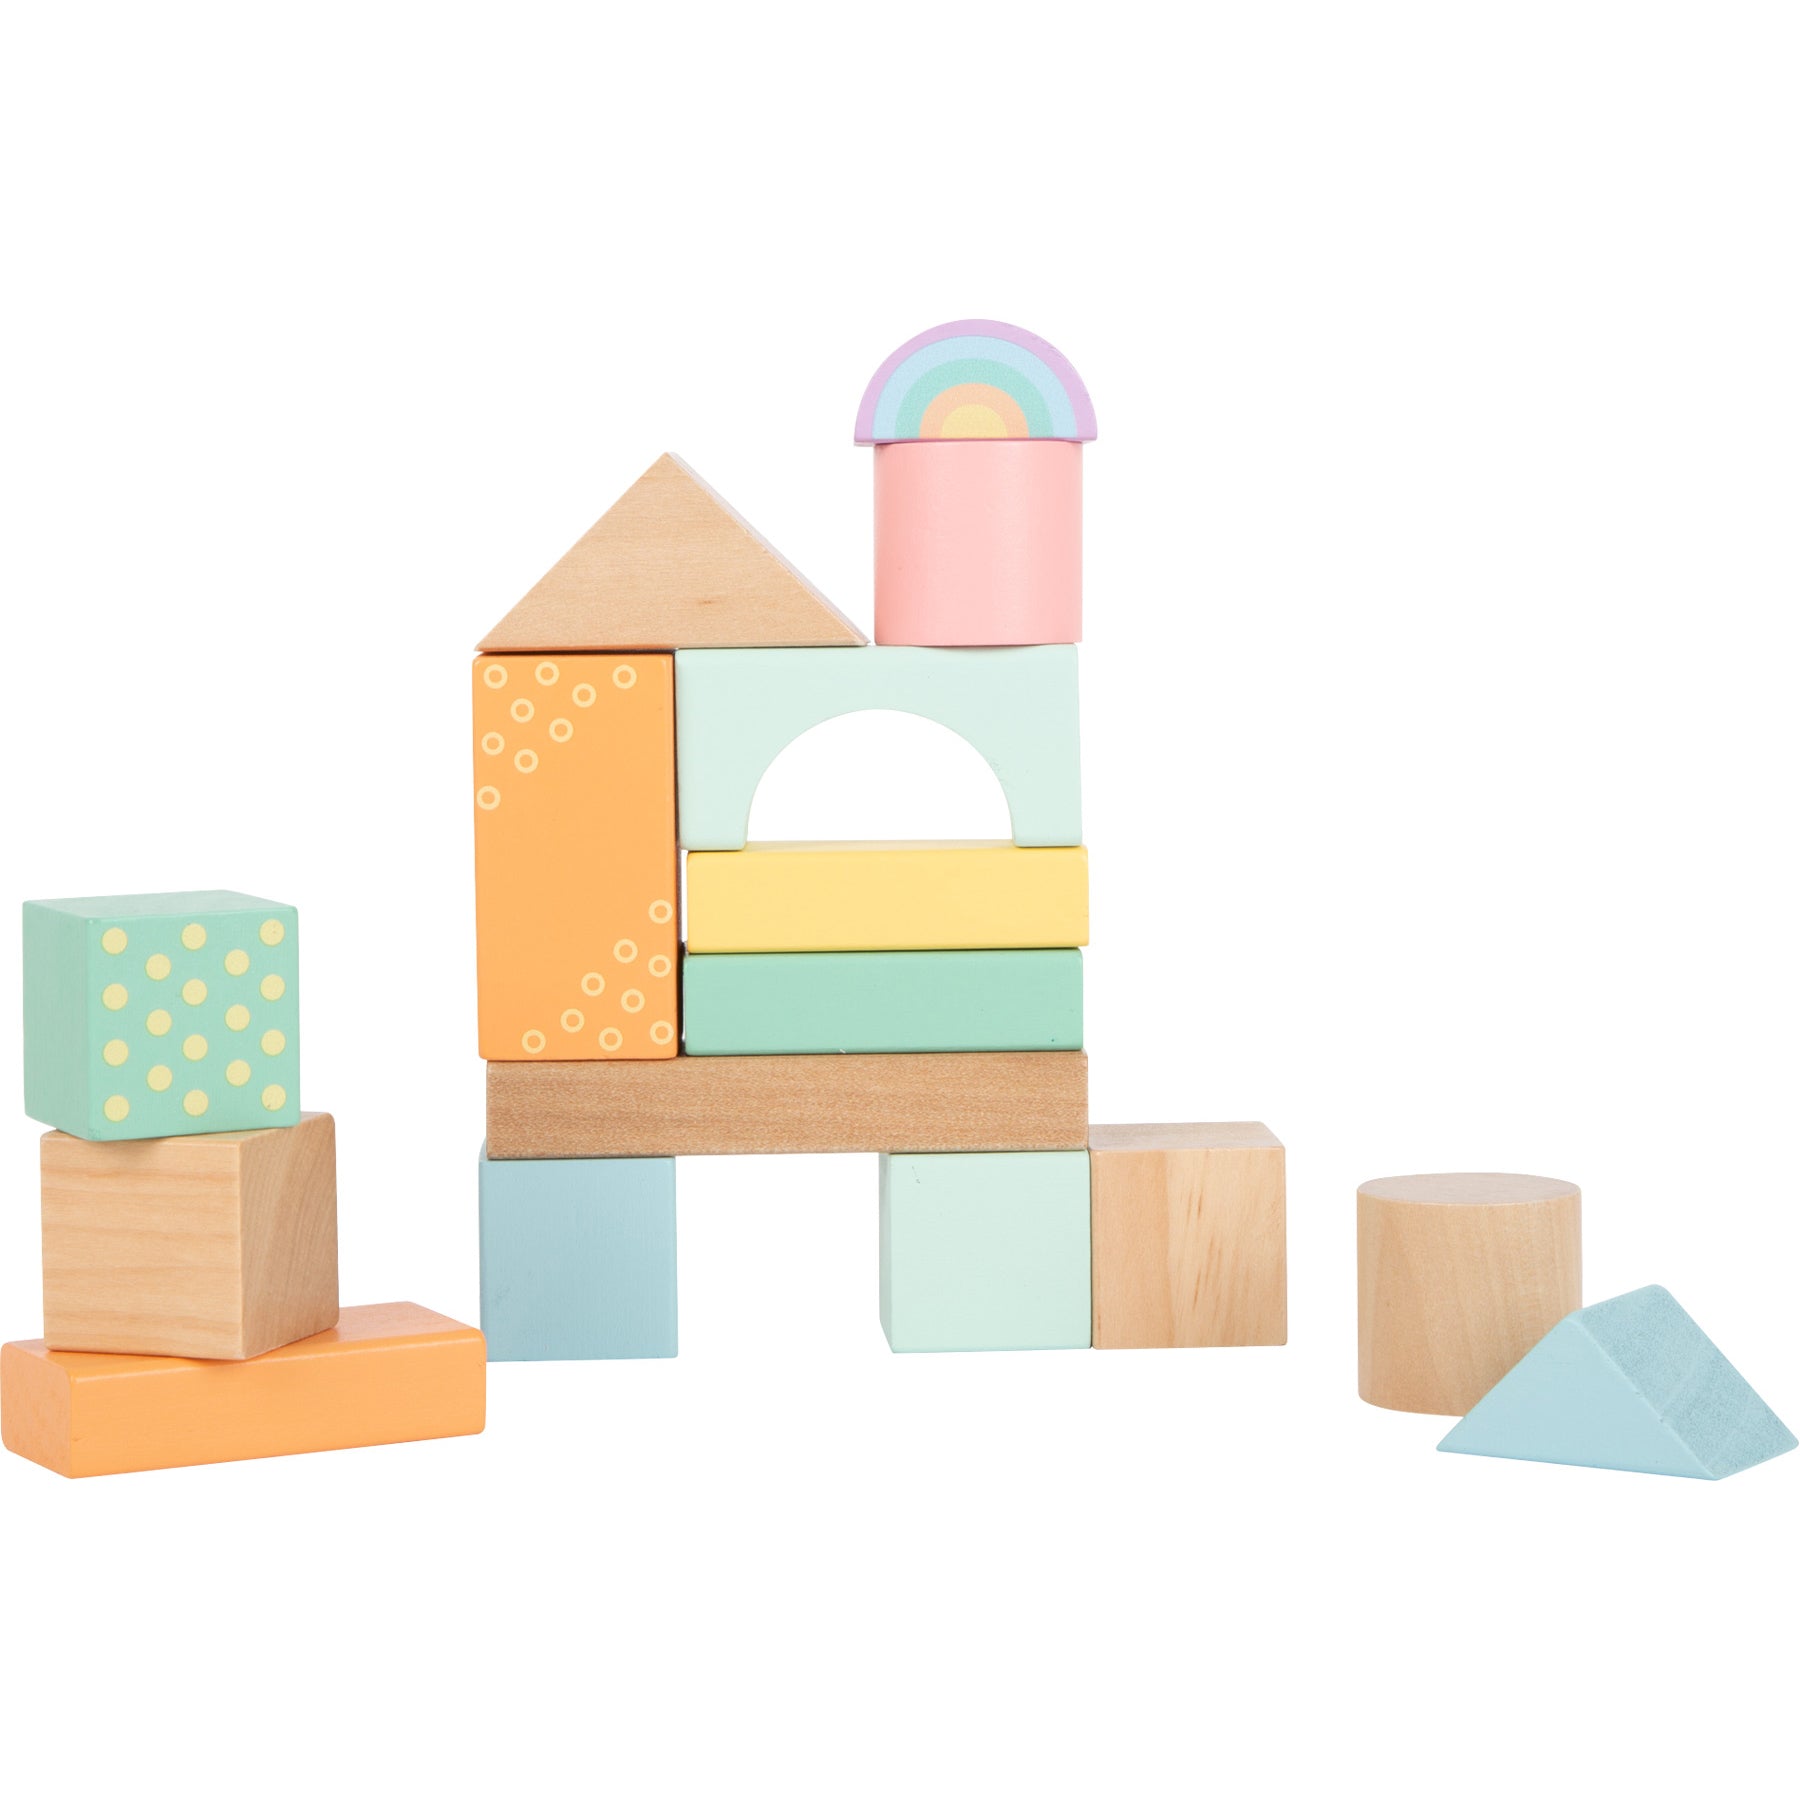 Small Foot Wooden Building Blocks - Pastel